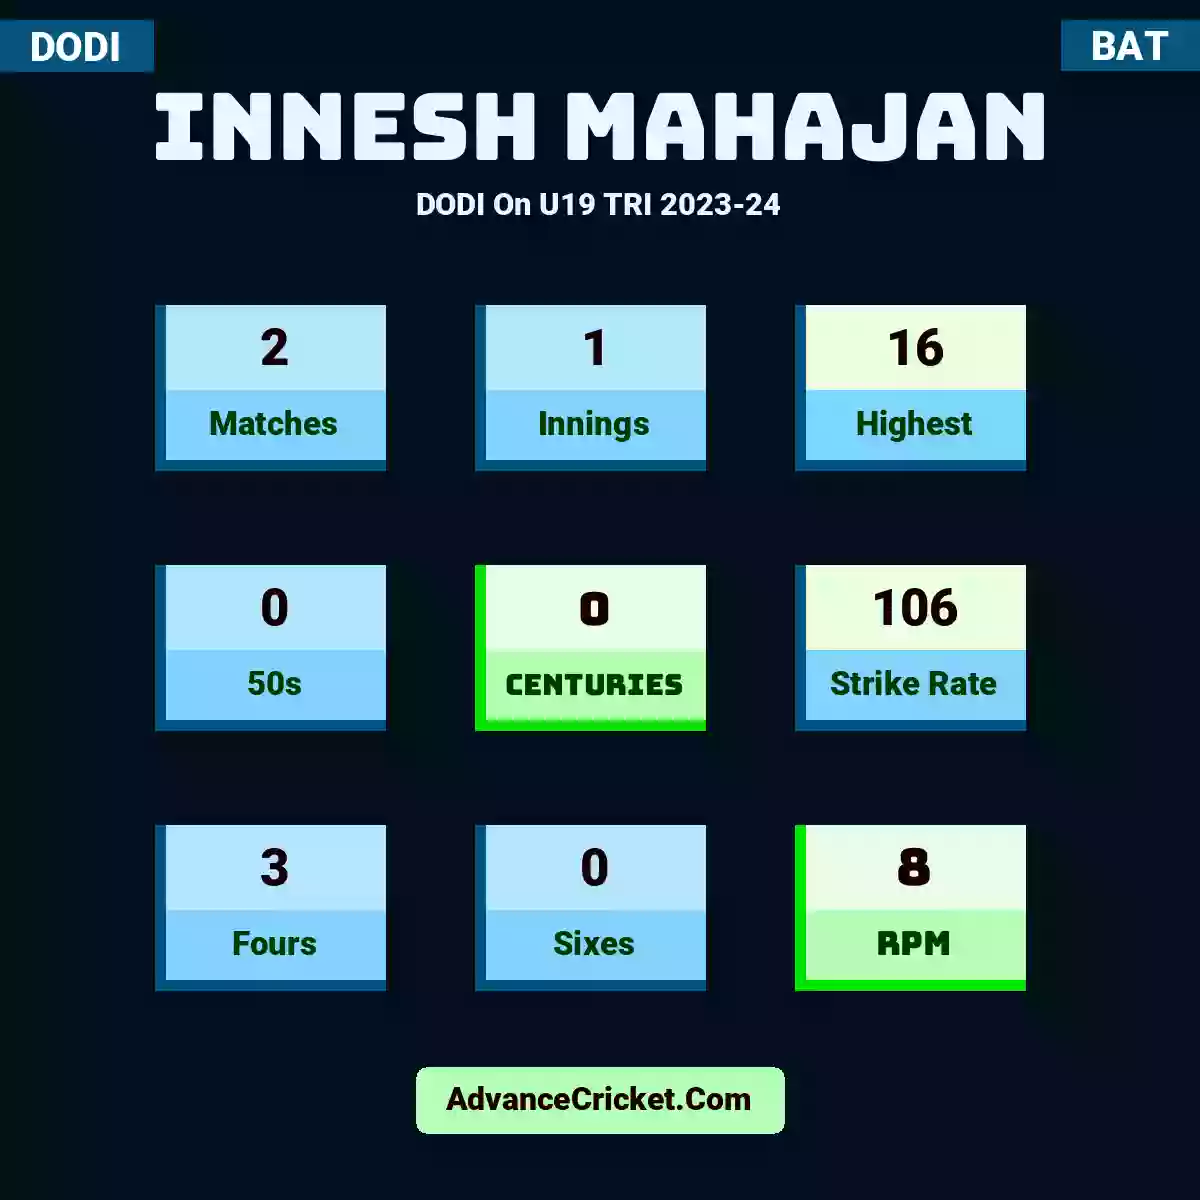 Innesh Mahajan DODI  On U19 TRI 2023-24, Innesh Mahajan played 2 matches, scored 16 runs as highest, 0 half-centuries, and 0 centuries, with a strike rate of 106. I.Mahajan hit 3 fours and 0 sixes, with an RPM of 8.